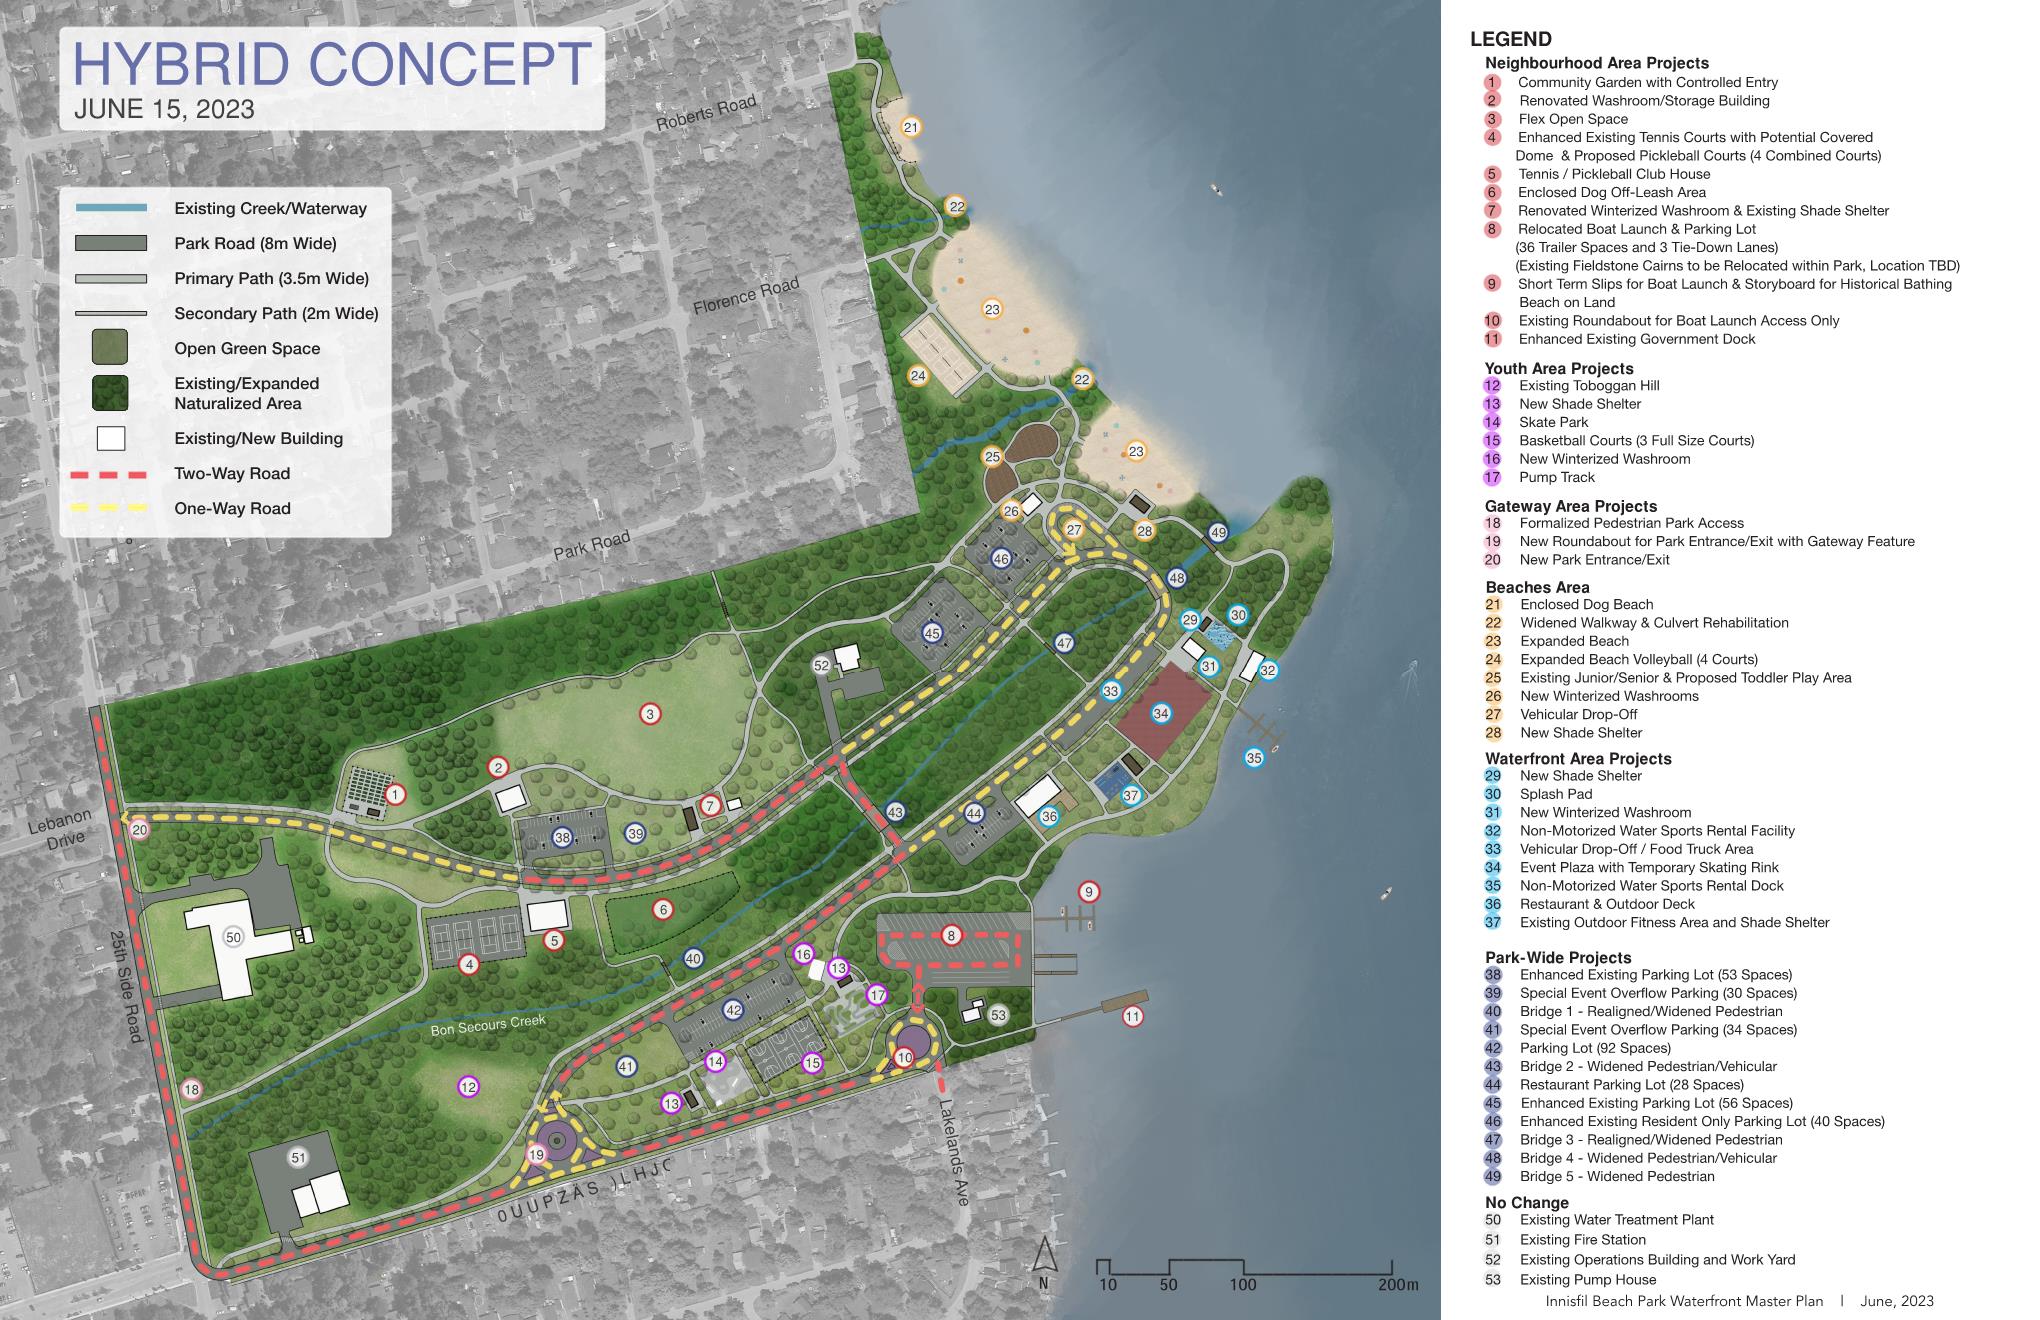 Map showing Innisfil Beach Park Final Concept